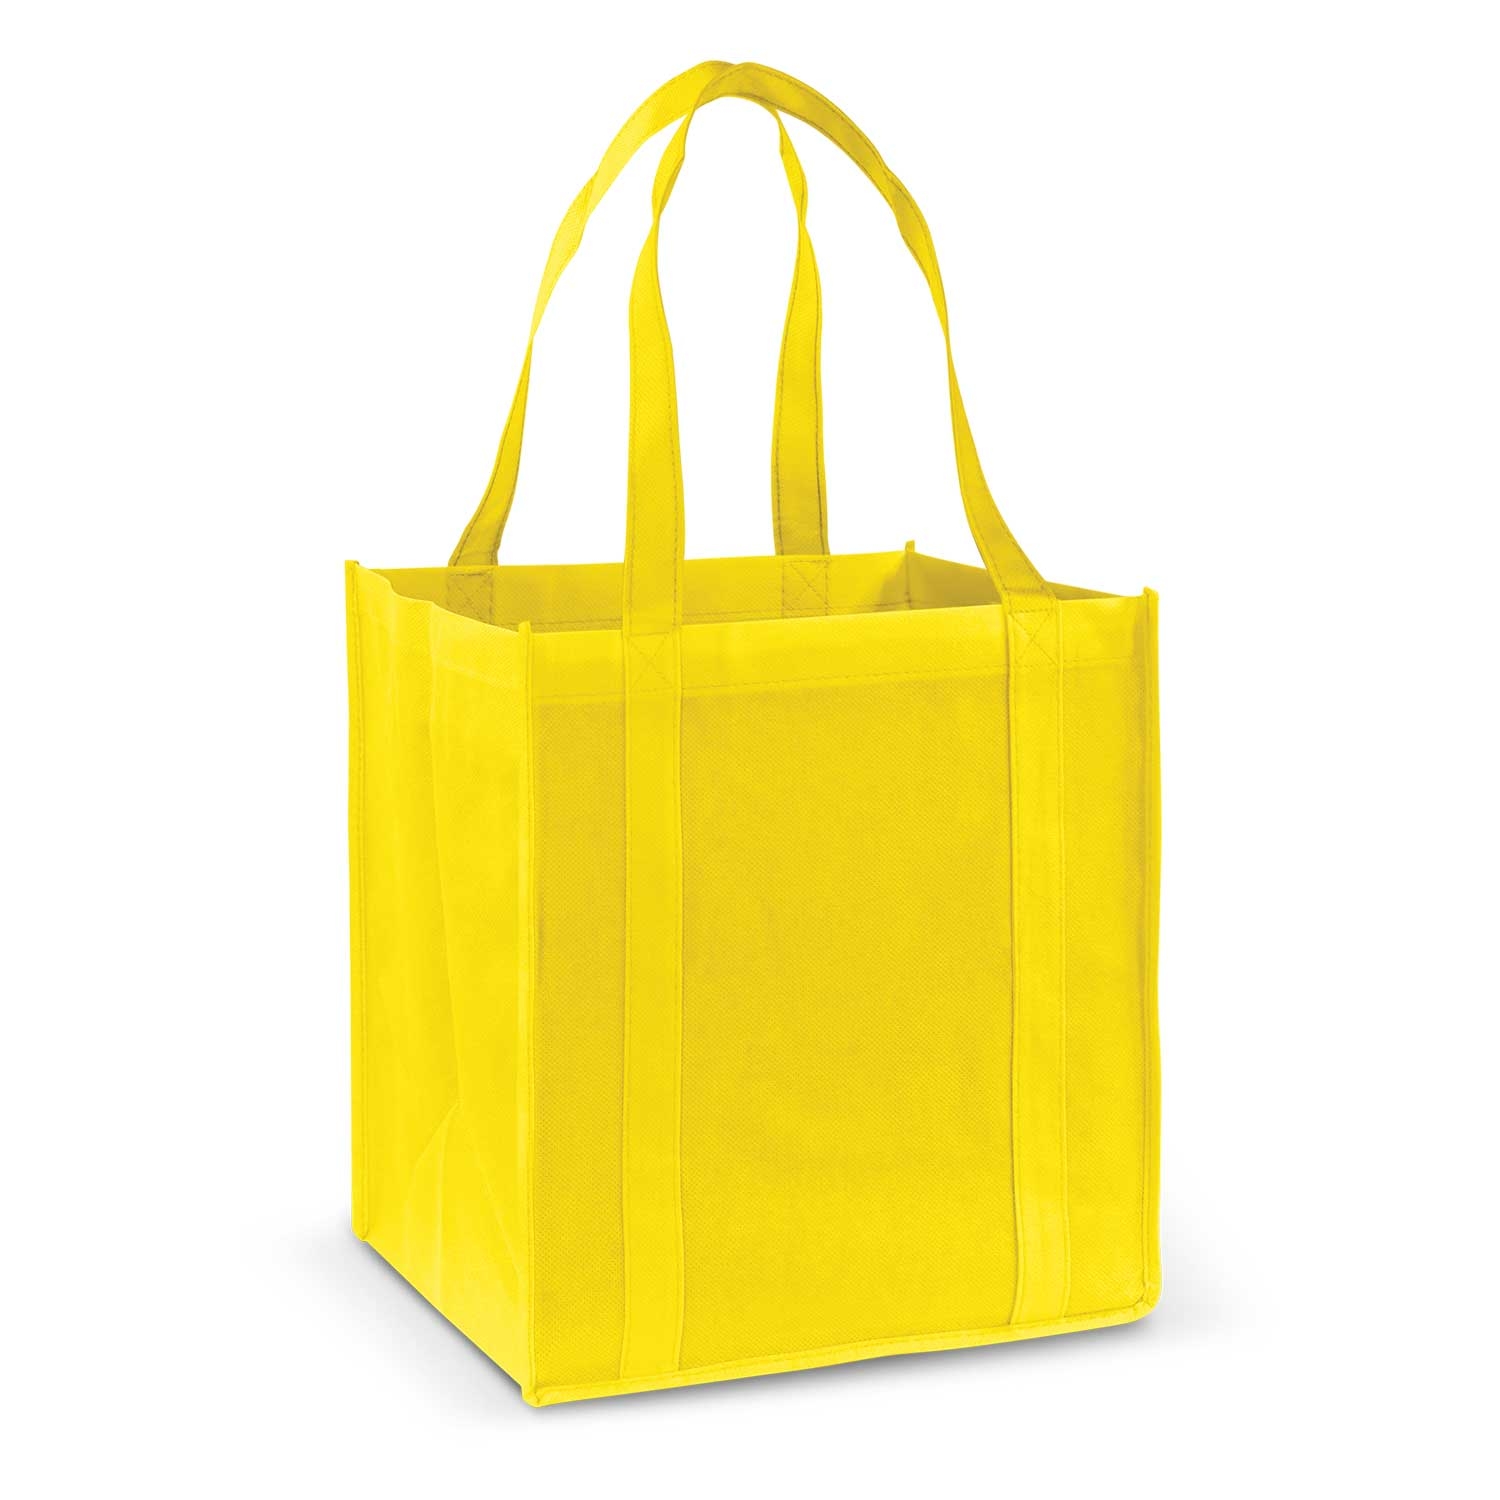 Super Shopper Tote Bag - Image Group